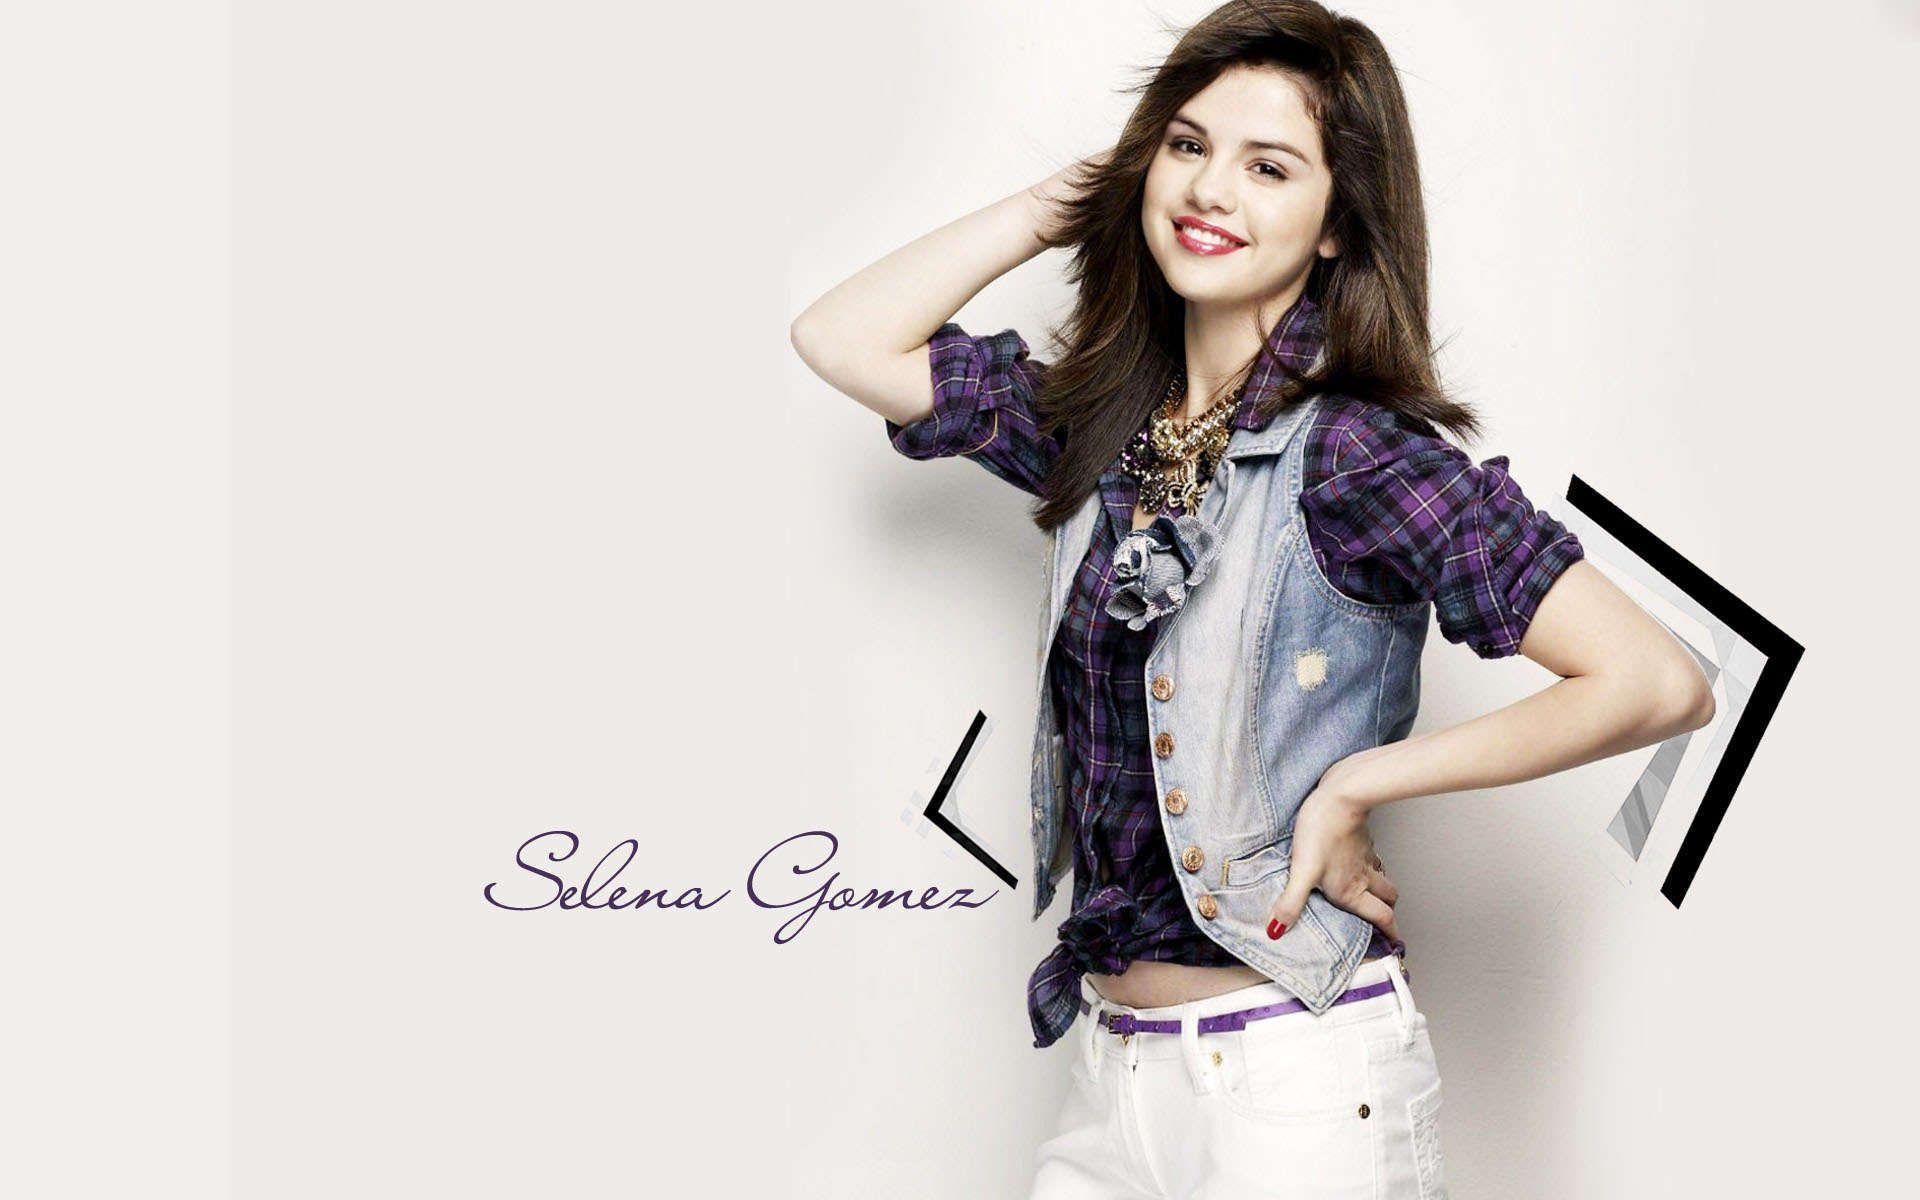 Selena Gomez Background. Wallpaper, Background, Image, Art